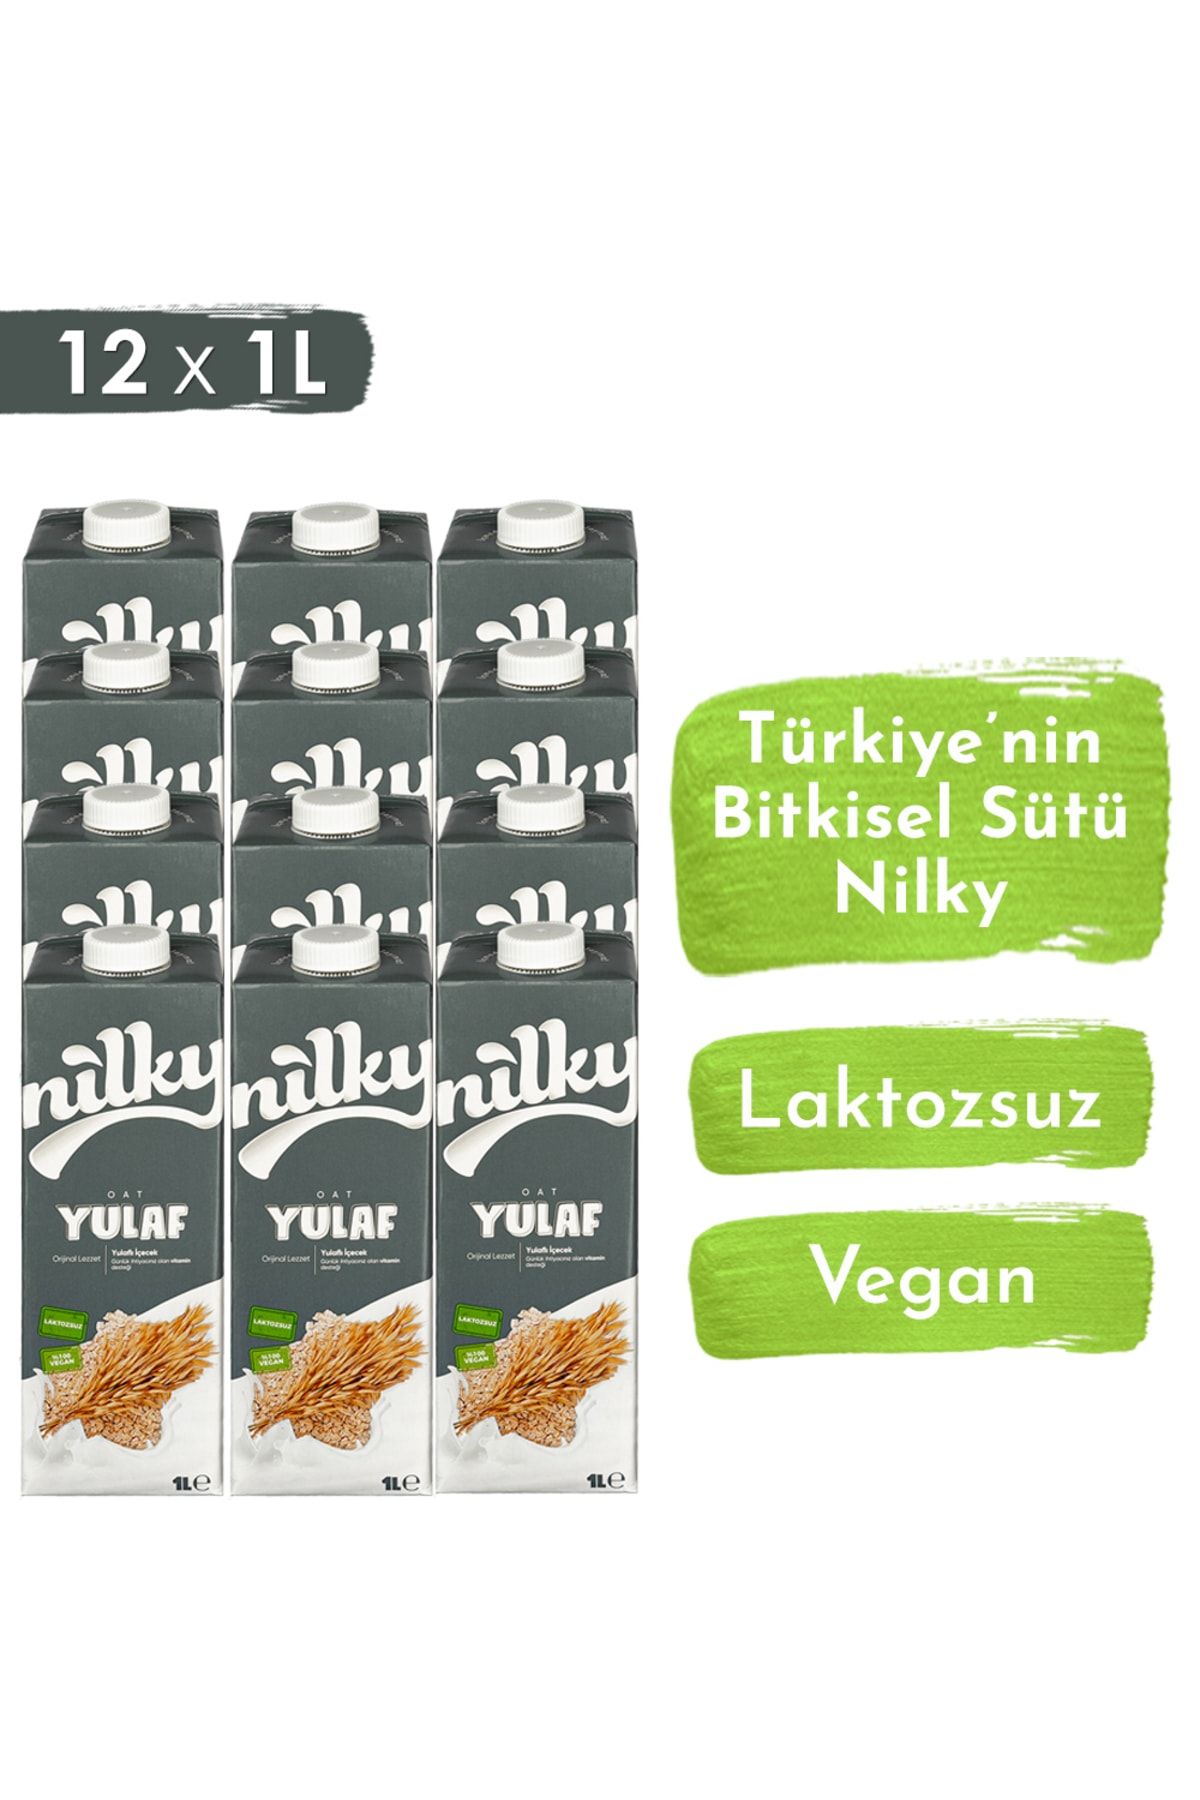 NİLKY Yulaf Sütü Bitkisel Bazlı Laktosuz Vegan 12x1 Lt